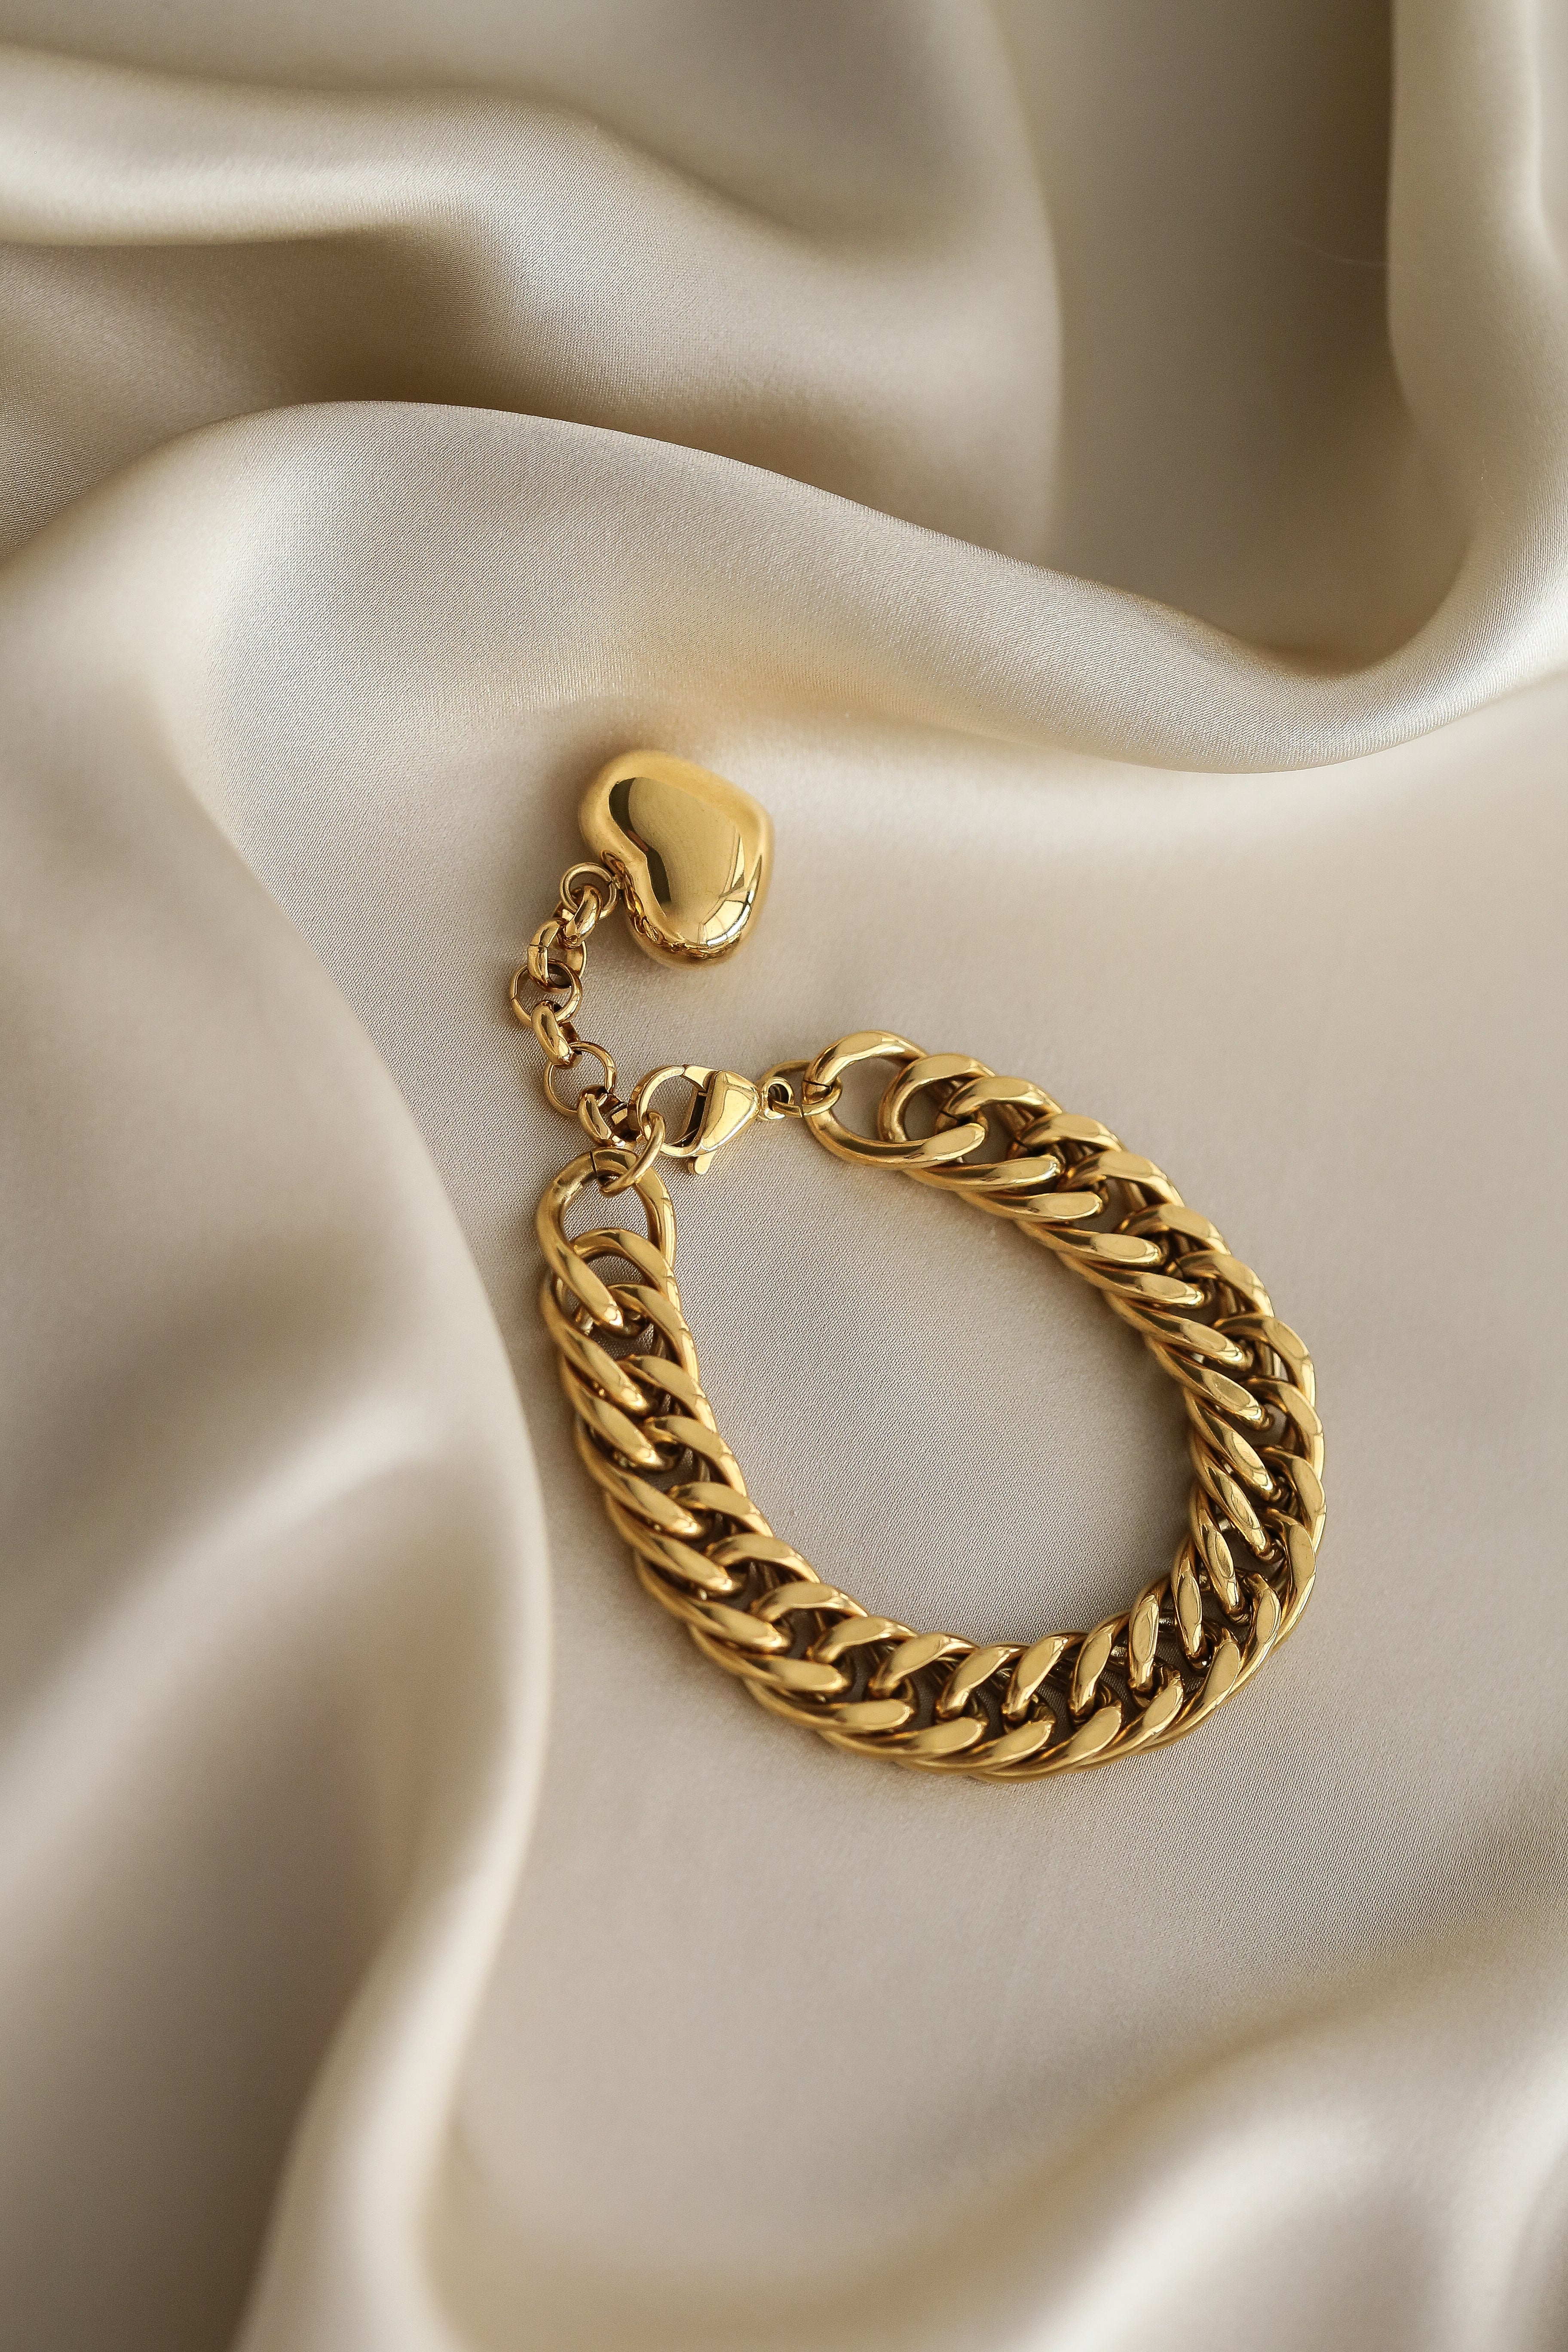 Kim Bracelet - Boutique Minimaliste has waterproof, durable, elegant and vintage inspired jewelry